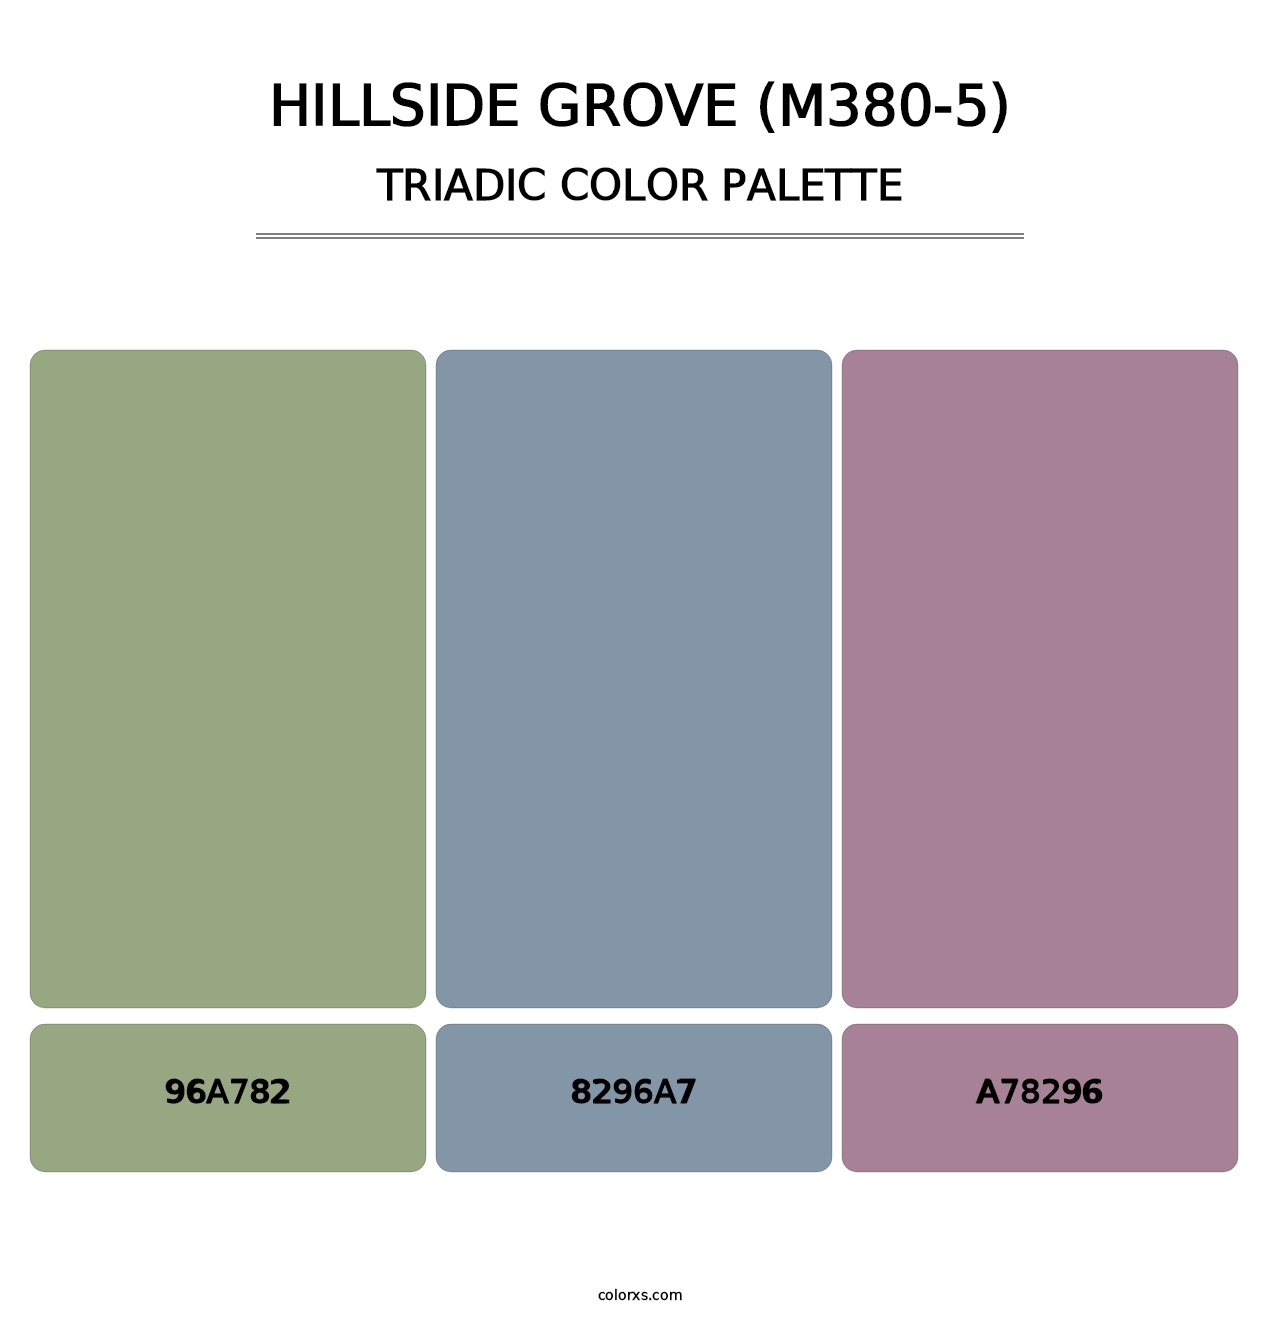 Hillside Grove (M380-5) - Triadic Color Palette